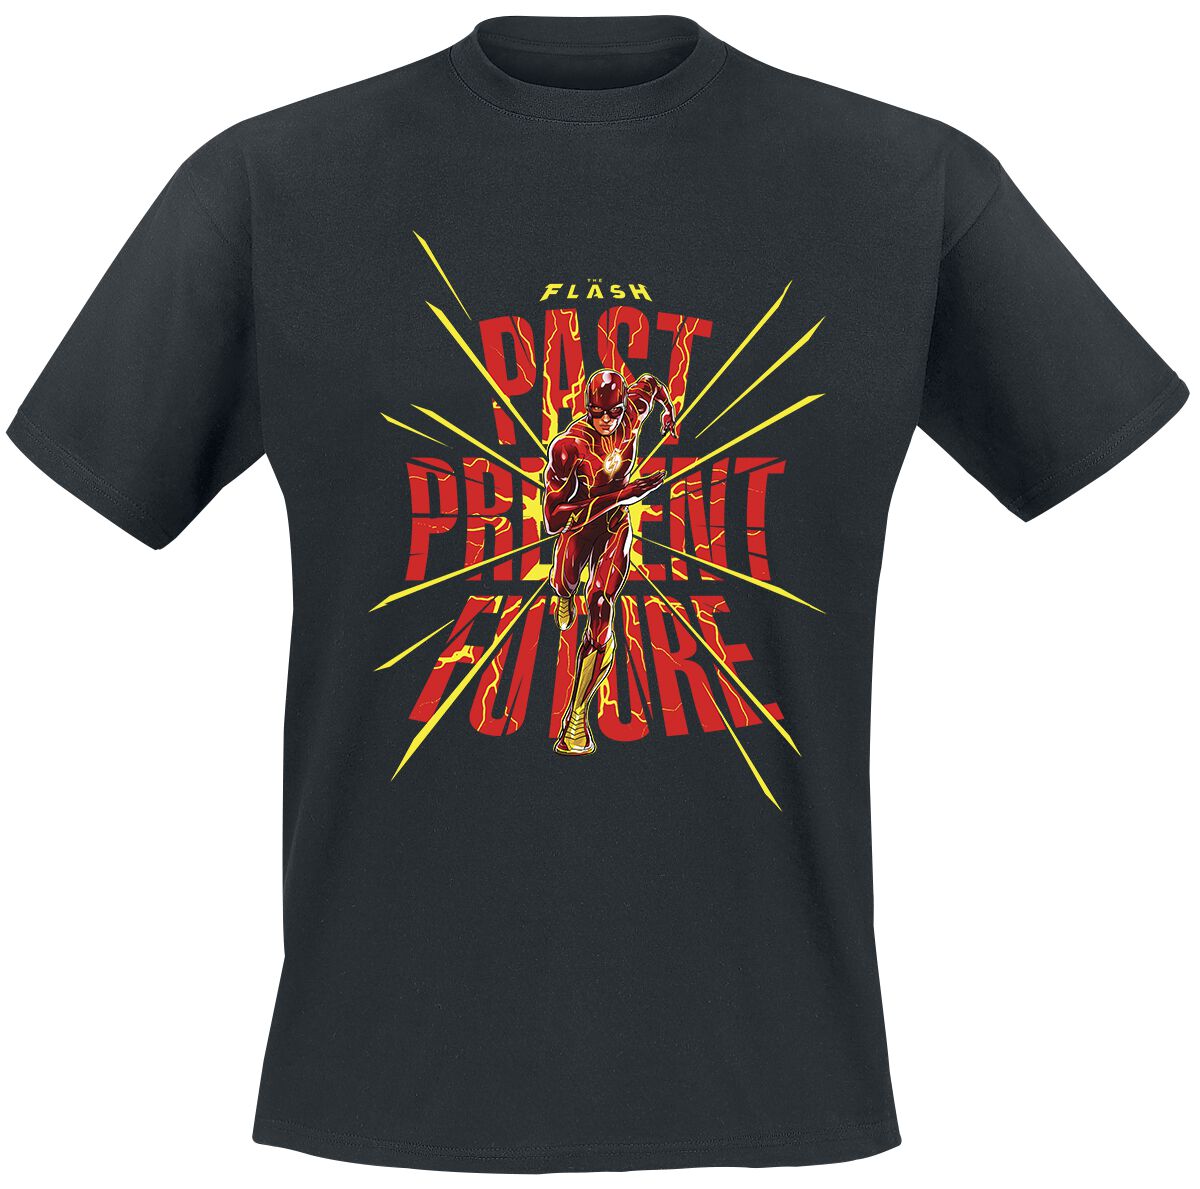 The Flash Past Present Future T-Shirt schwarz in M